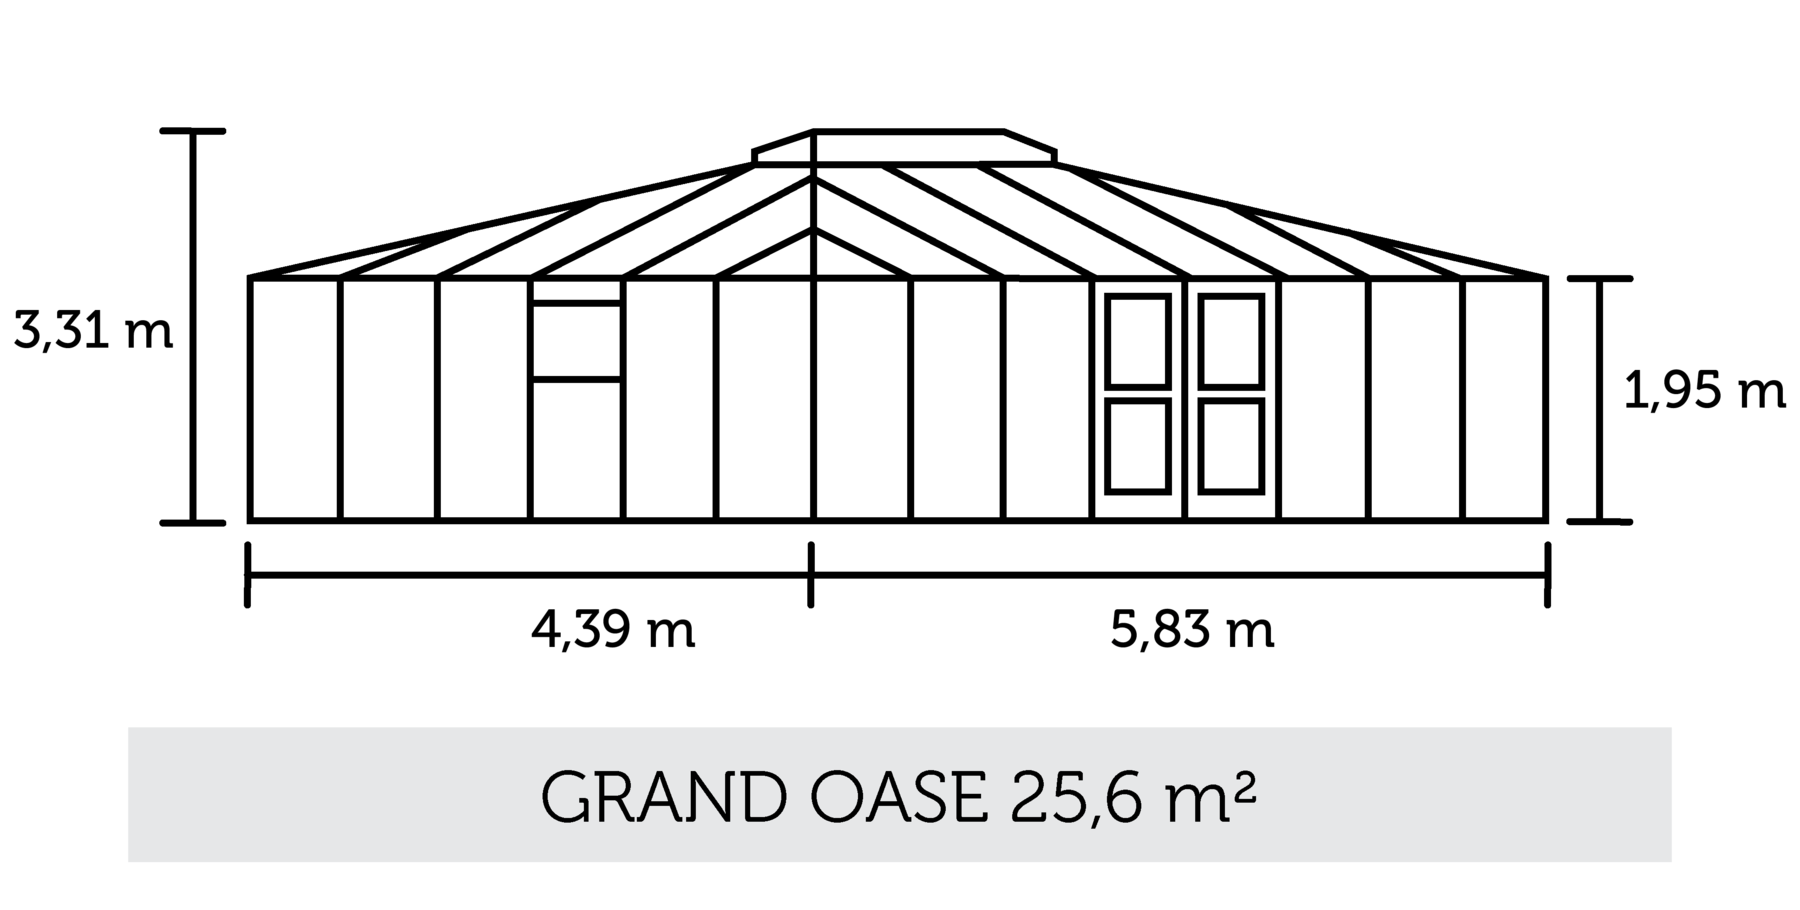 Juliana Grand Oase - 25,6 m2 anthracite/black 3 mm LPT